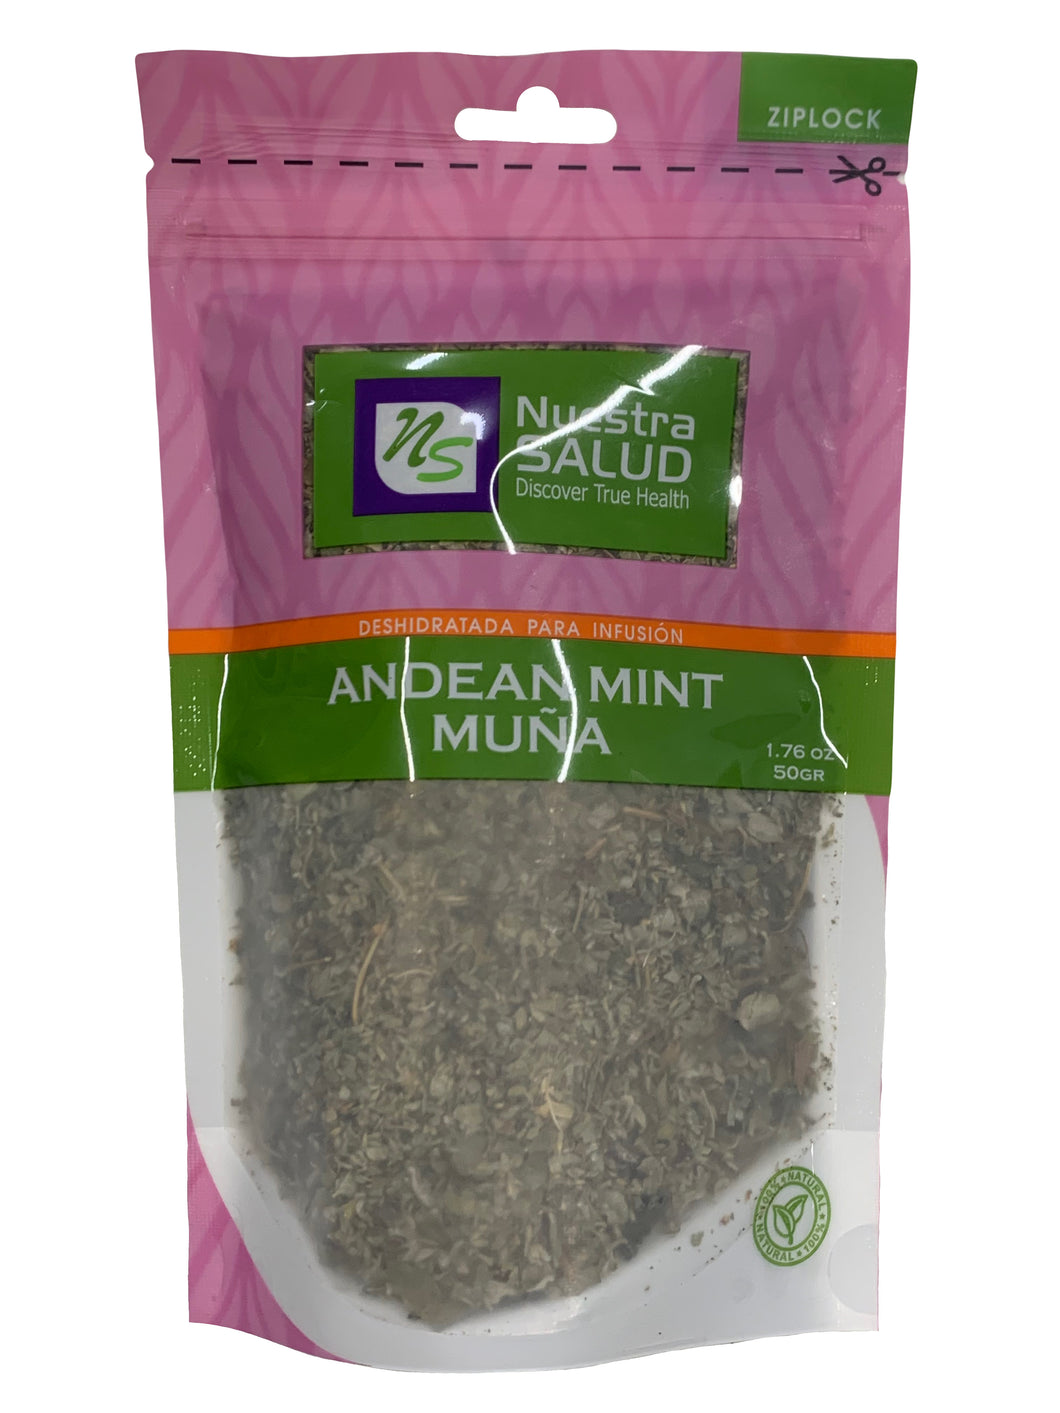 Nuestra Salud Andean Mint - Muna 50g